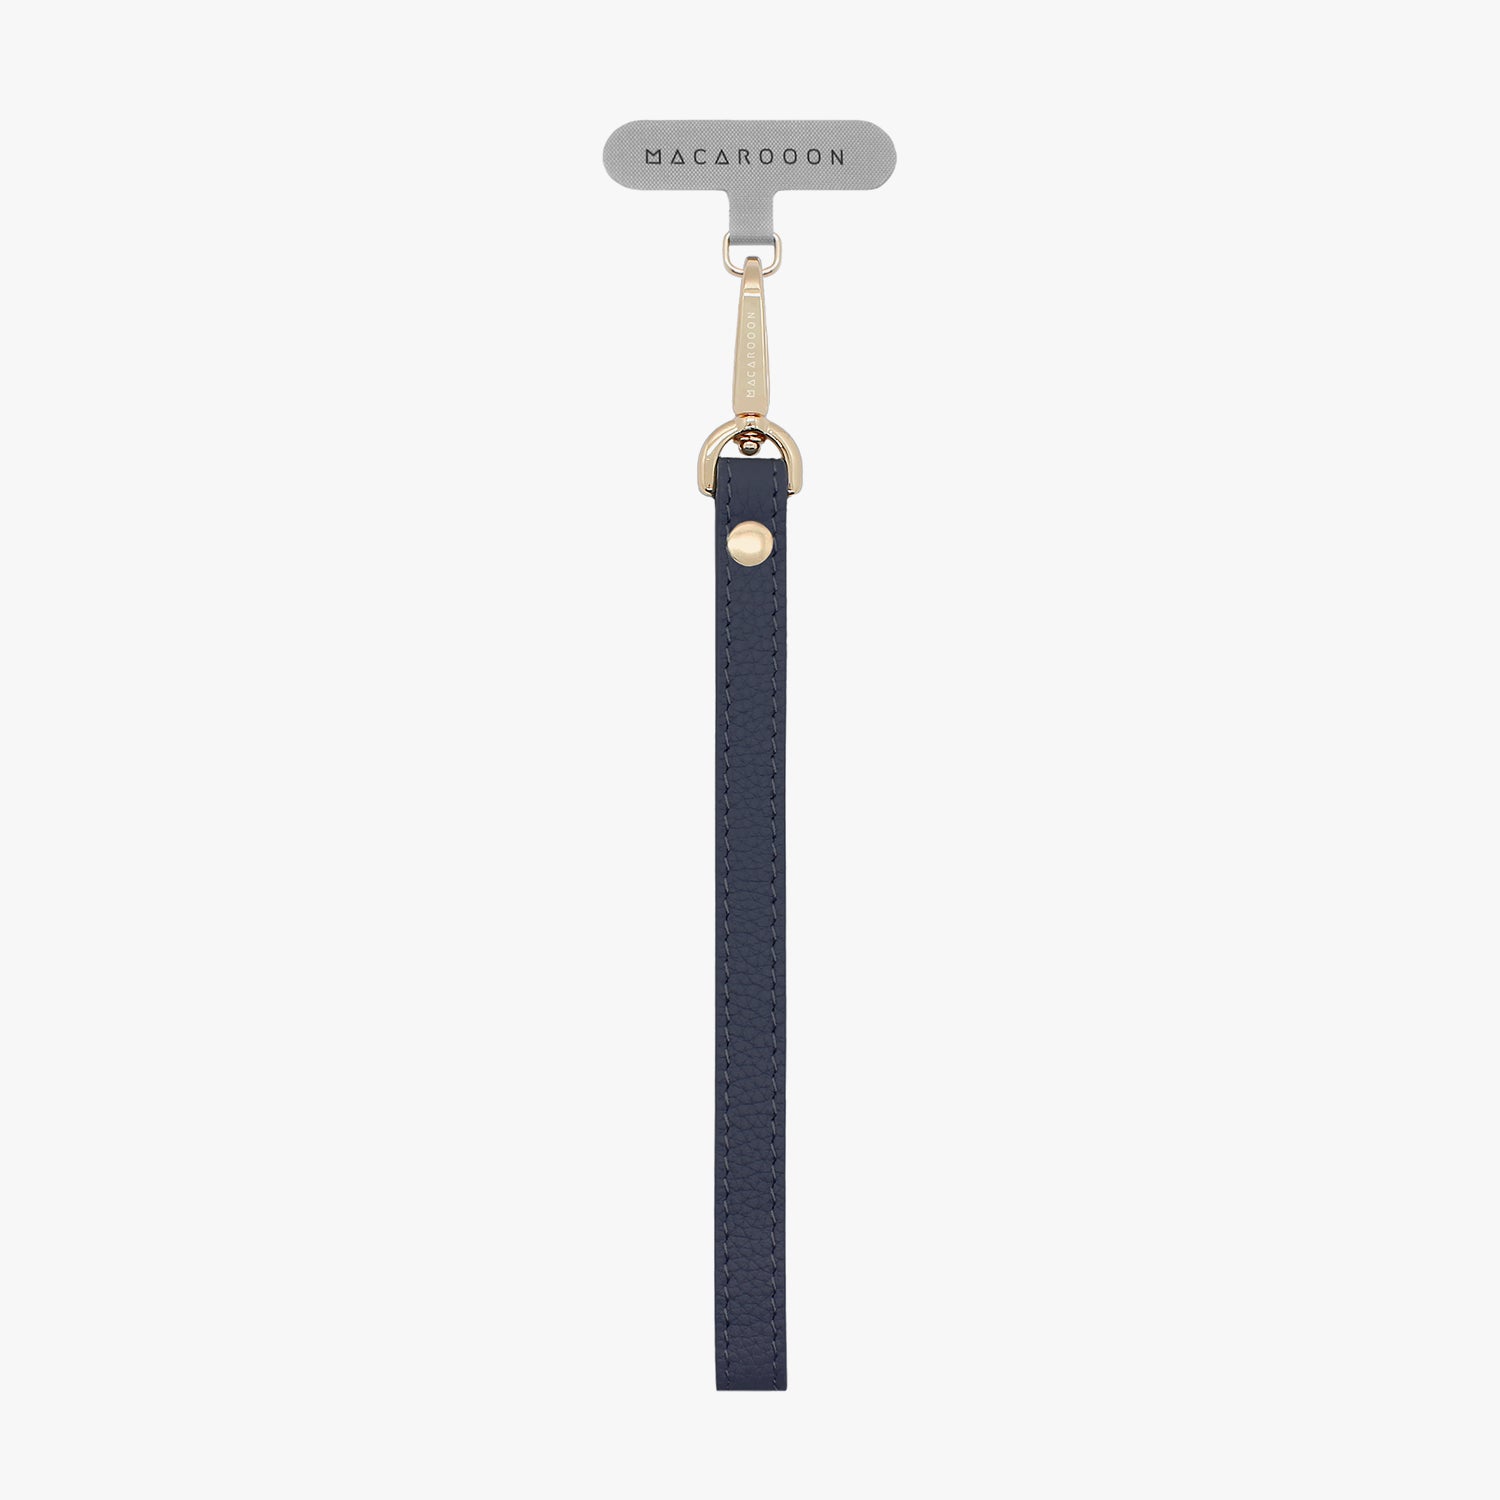 Leather Wrist Phone Strap | macarooon.com